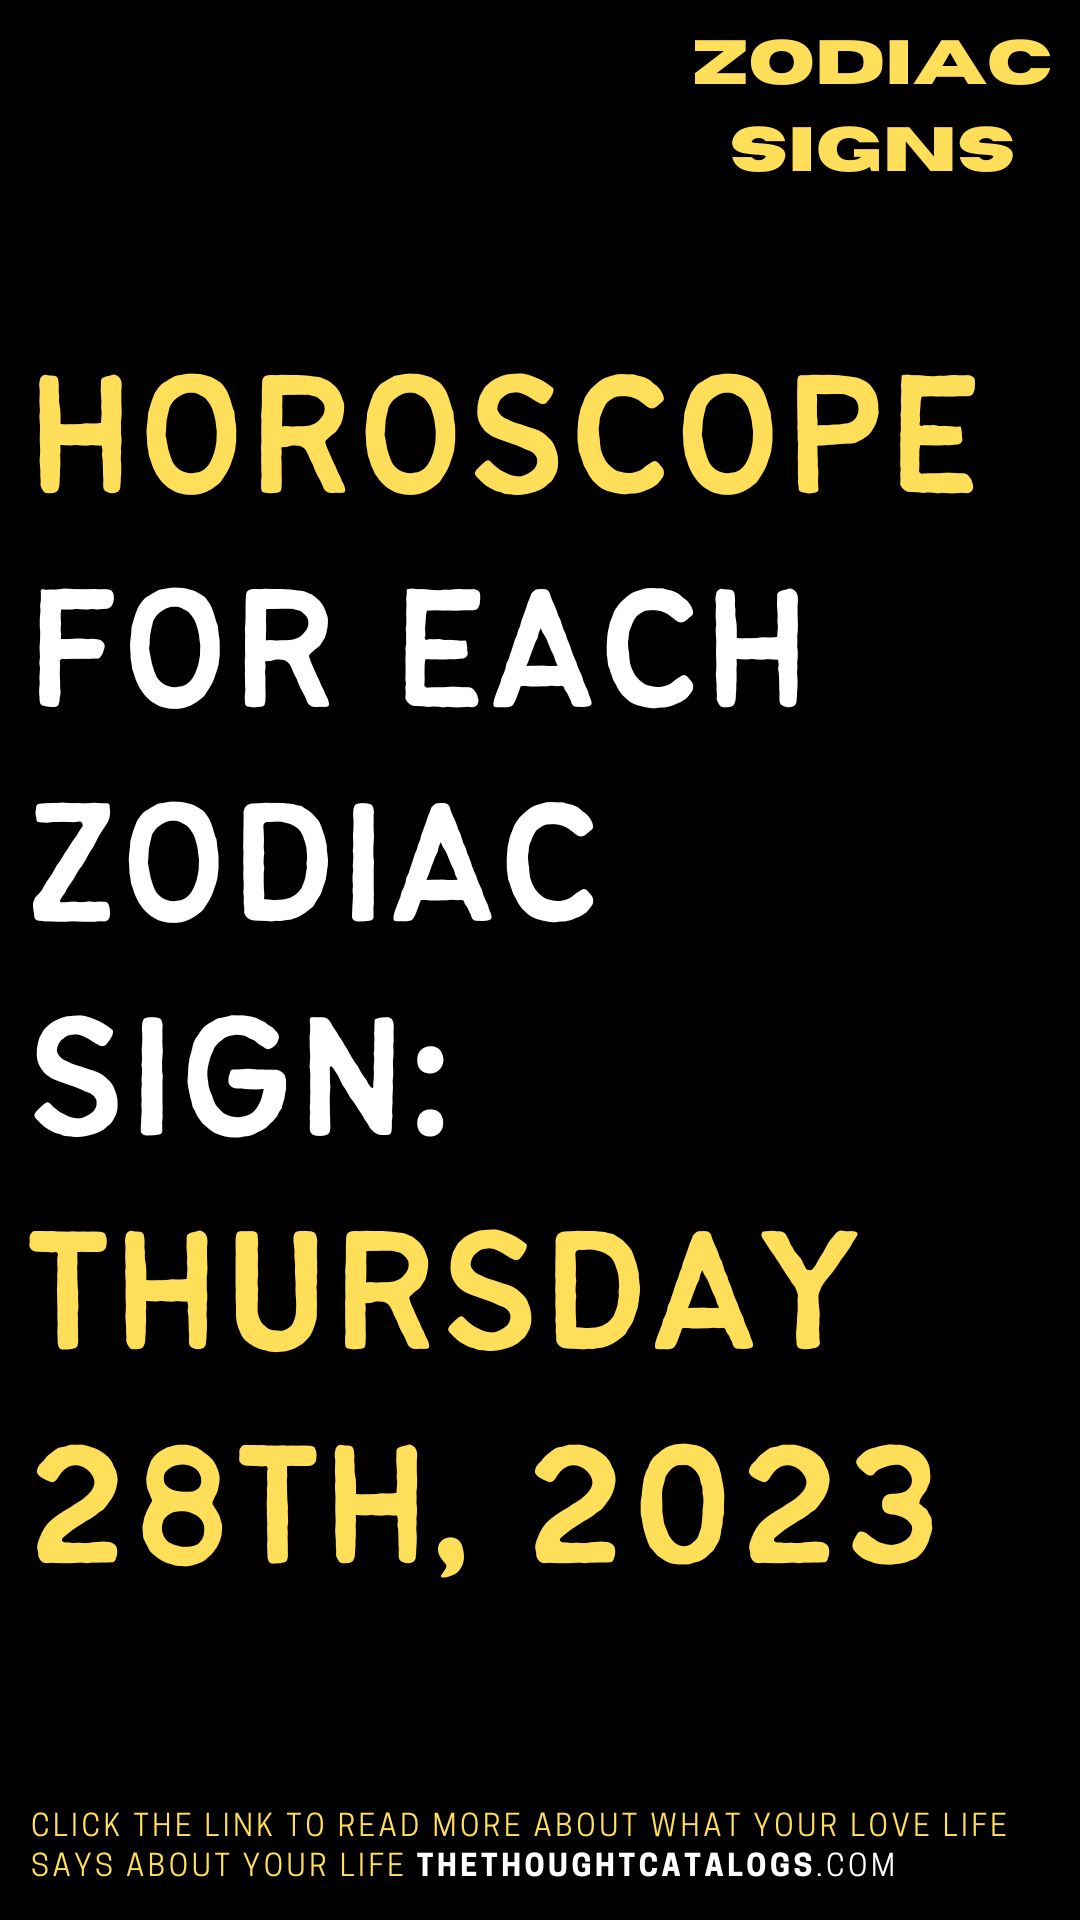 Horoscope For Each Zodiac Sign: Thursday 28th, 2023